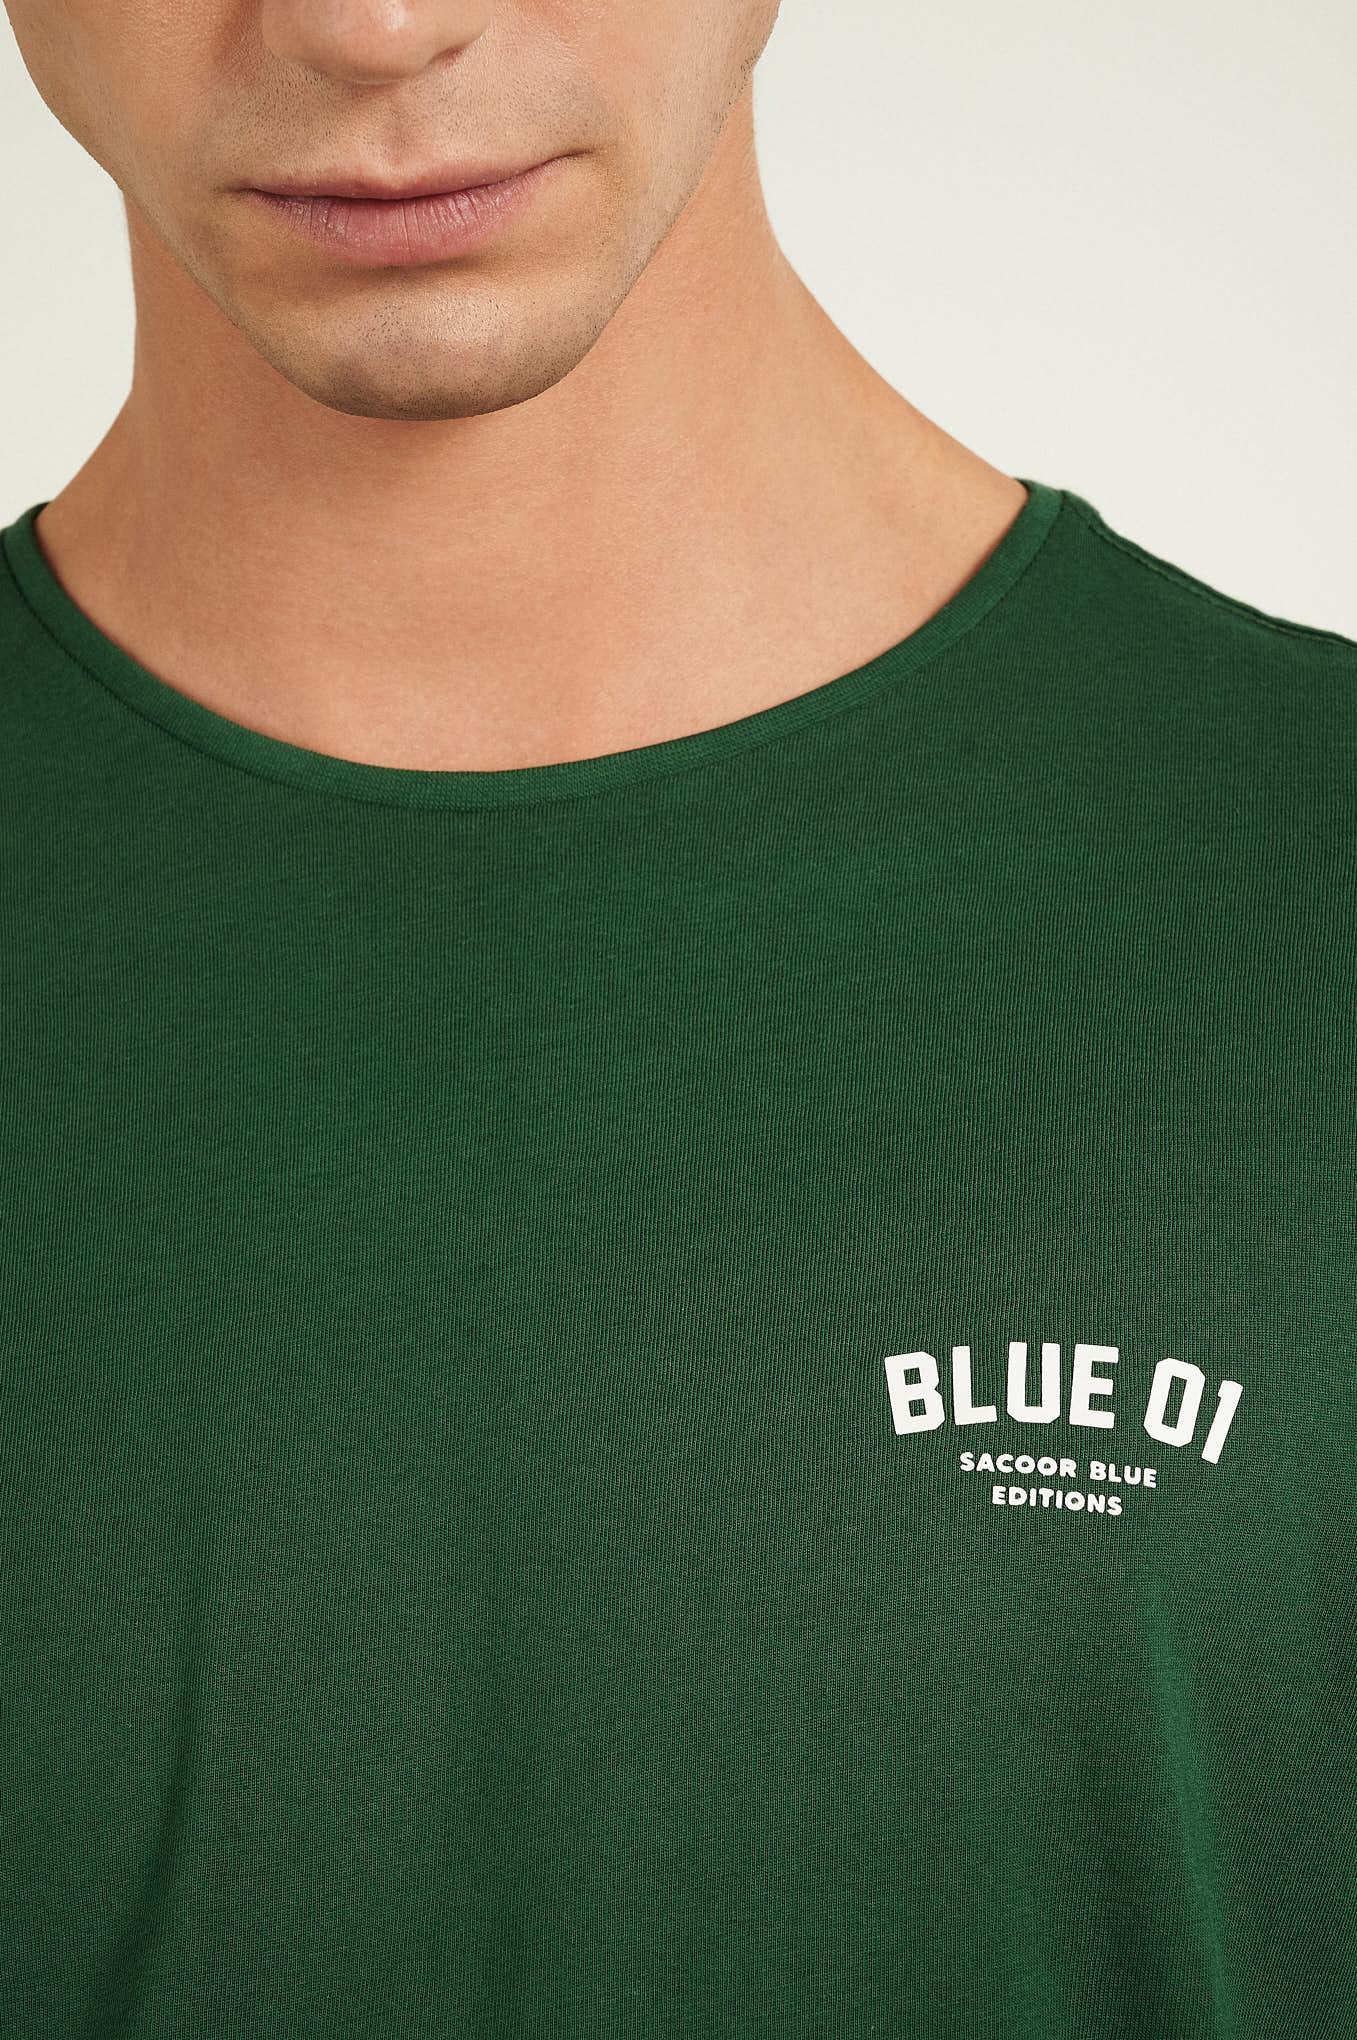 T-Shirt Verde Casual Homem